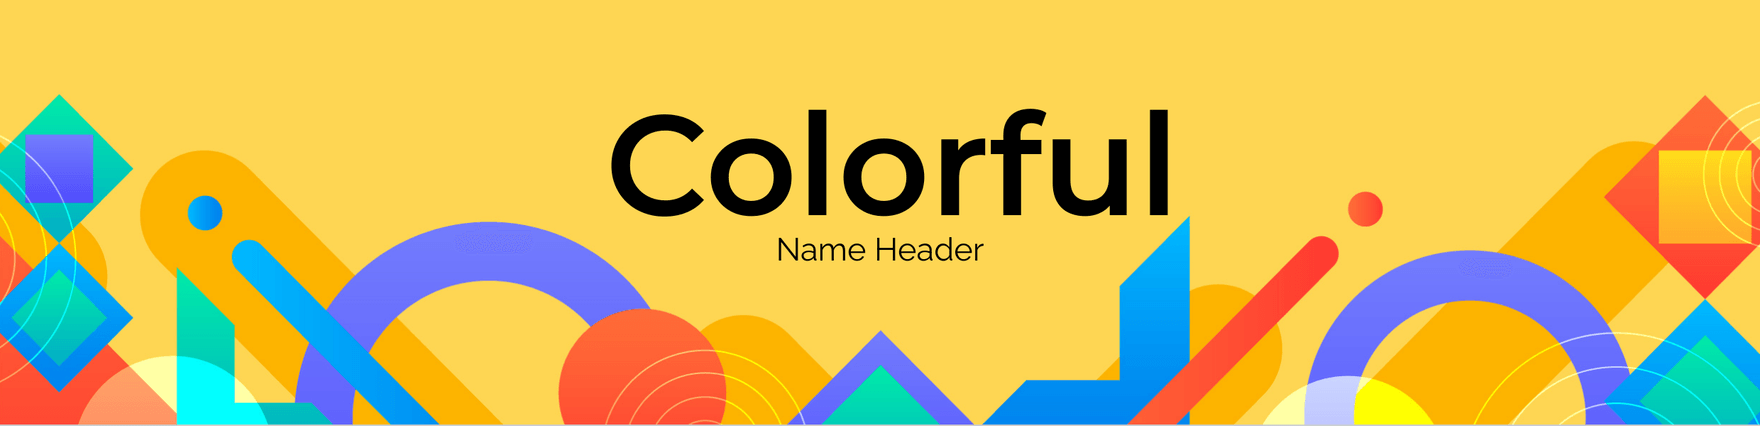 Colorful Name Header